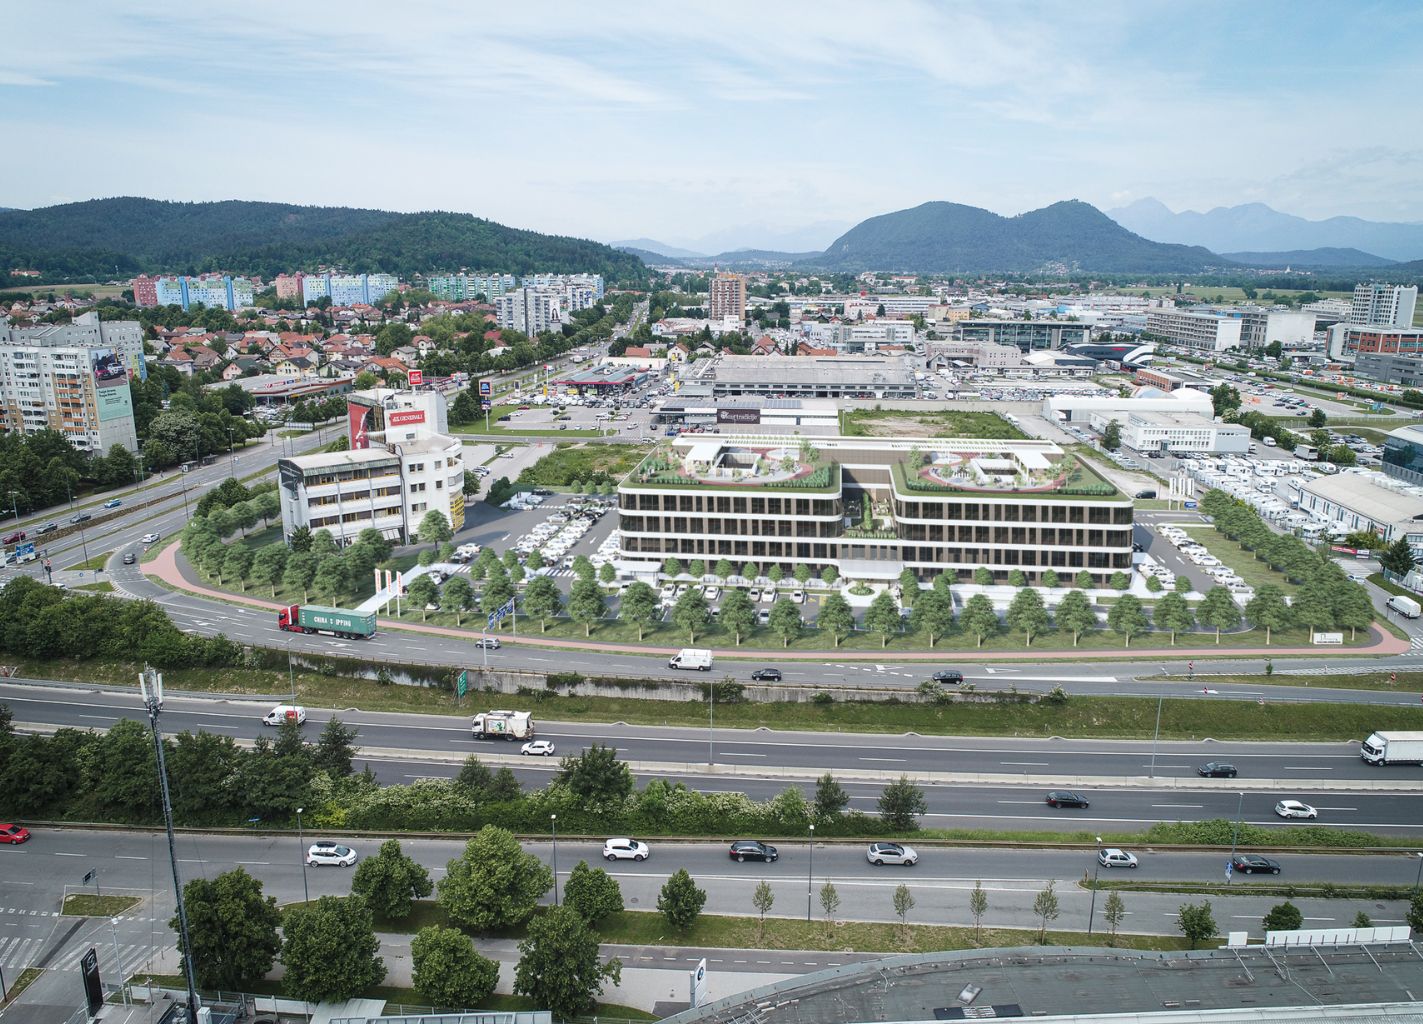 Poslovni center Šiška, Ljubljana - 